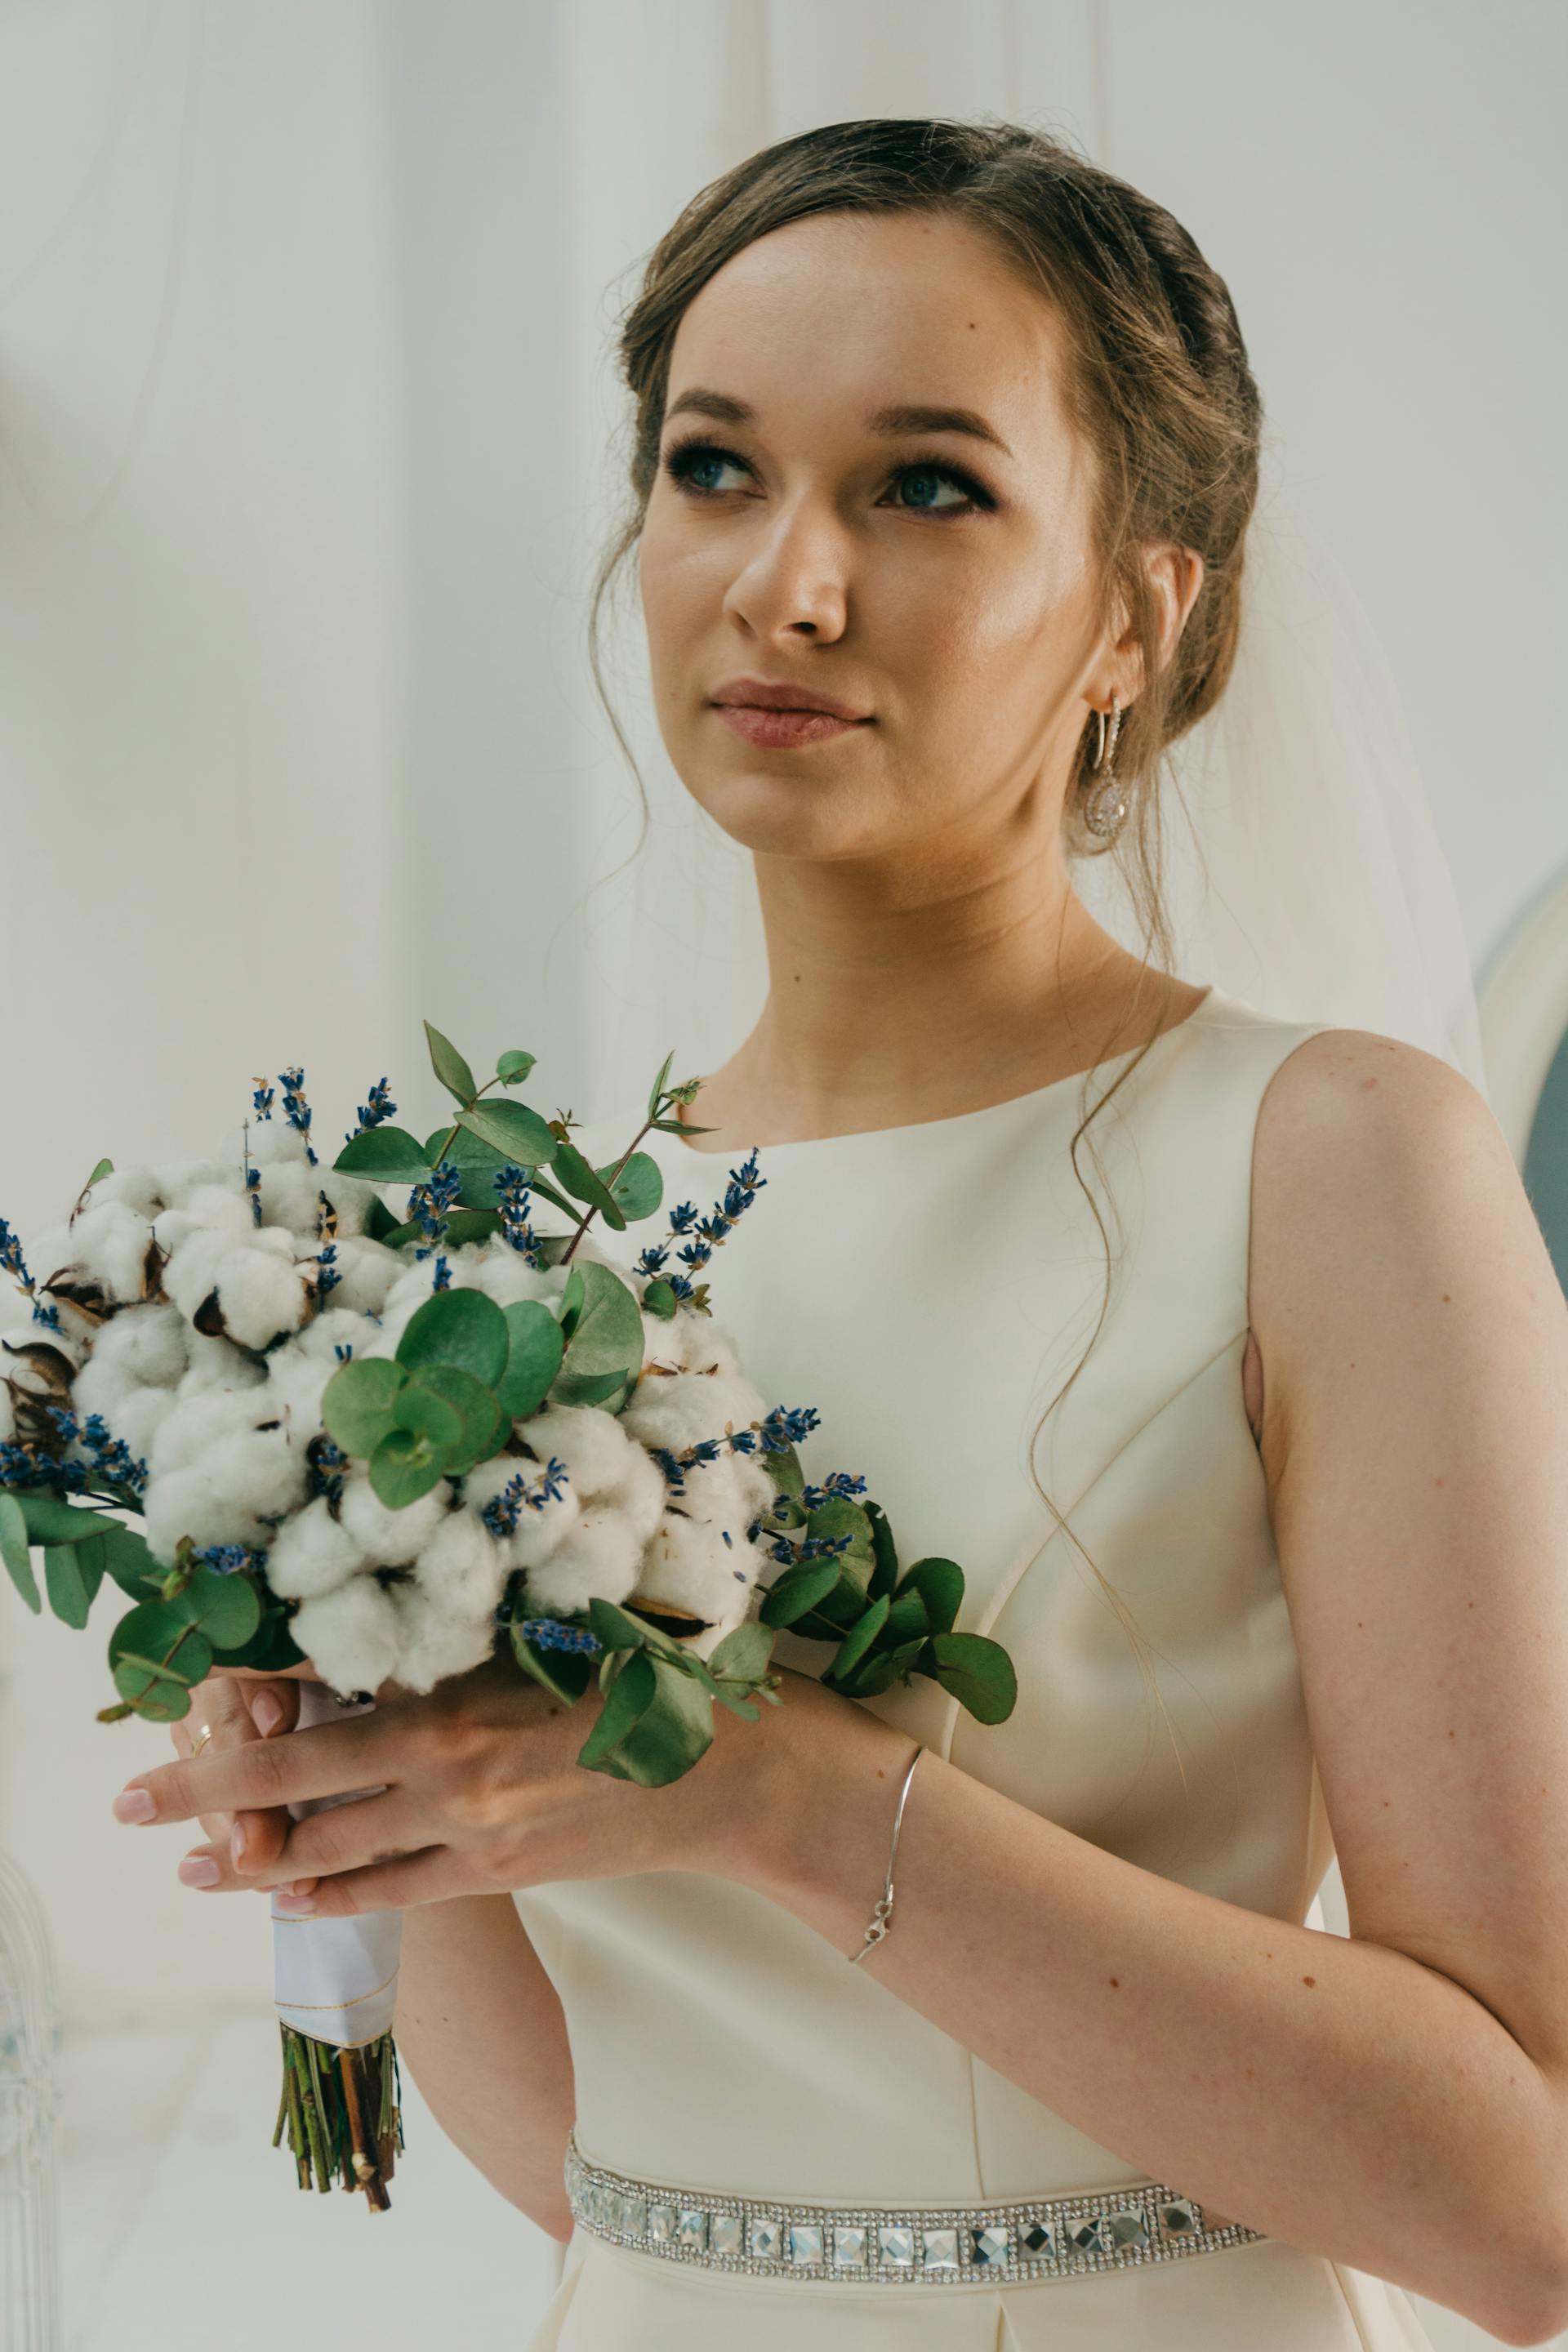 Serious bride | Source: Pexels